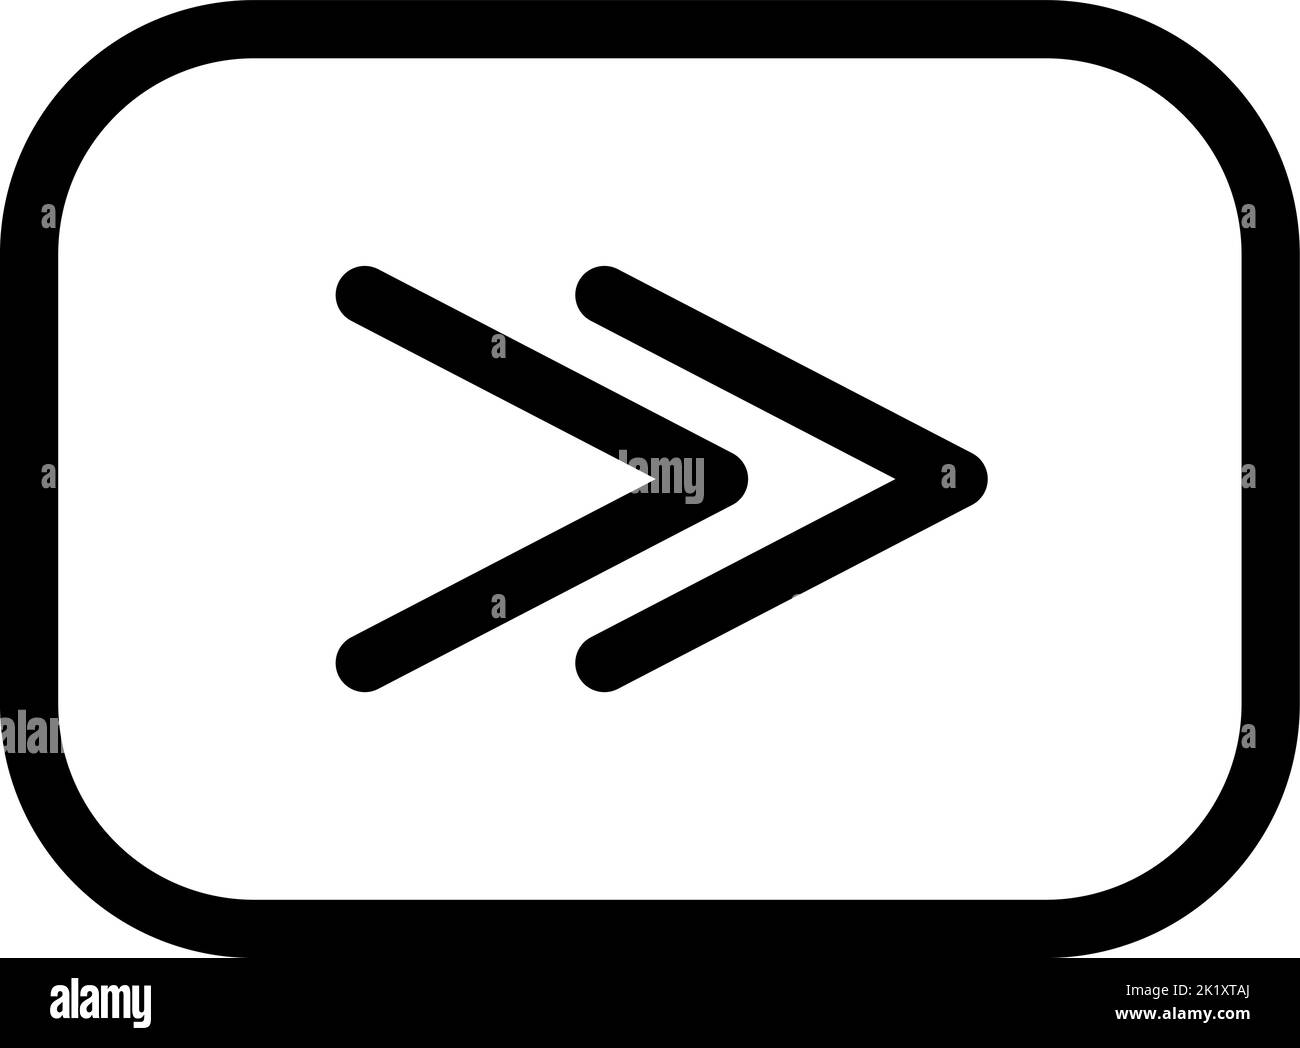 Fast forward vector logo icon. Symbol in Line Art Style for Design, Presentation, Website or Mobile Apps Elements. Sign illustration. Pixel graphic Stock Vector